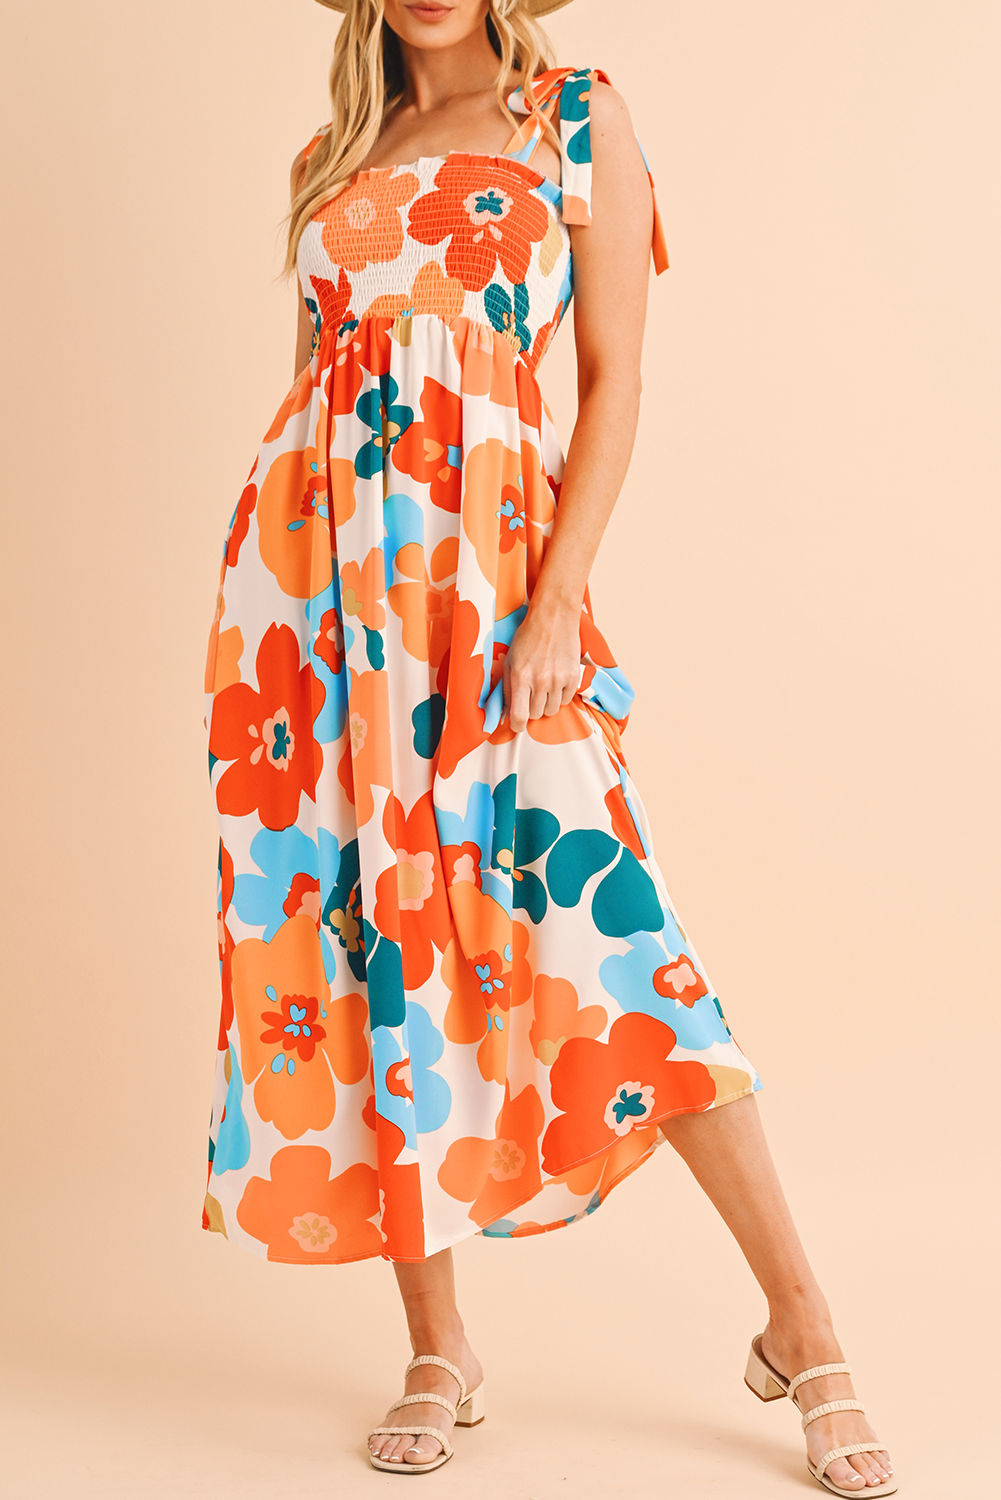 Shewin Wholesale Clothing Orange 60s Floral Printed Shoulder TIE Smocked Maxi Dress